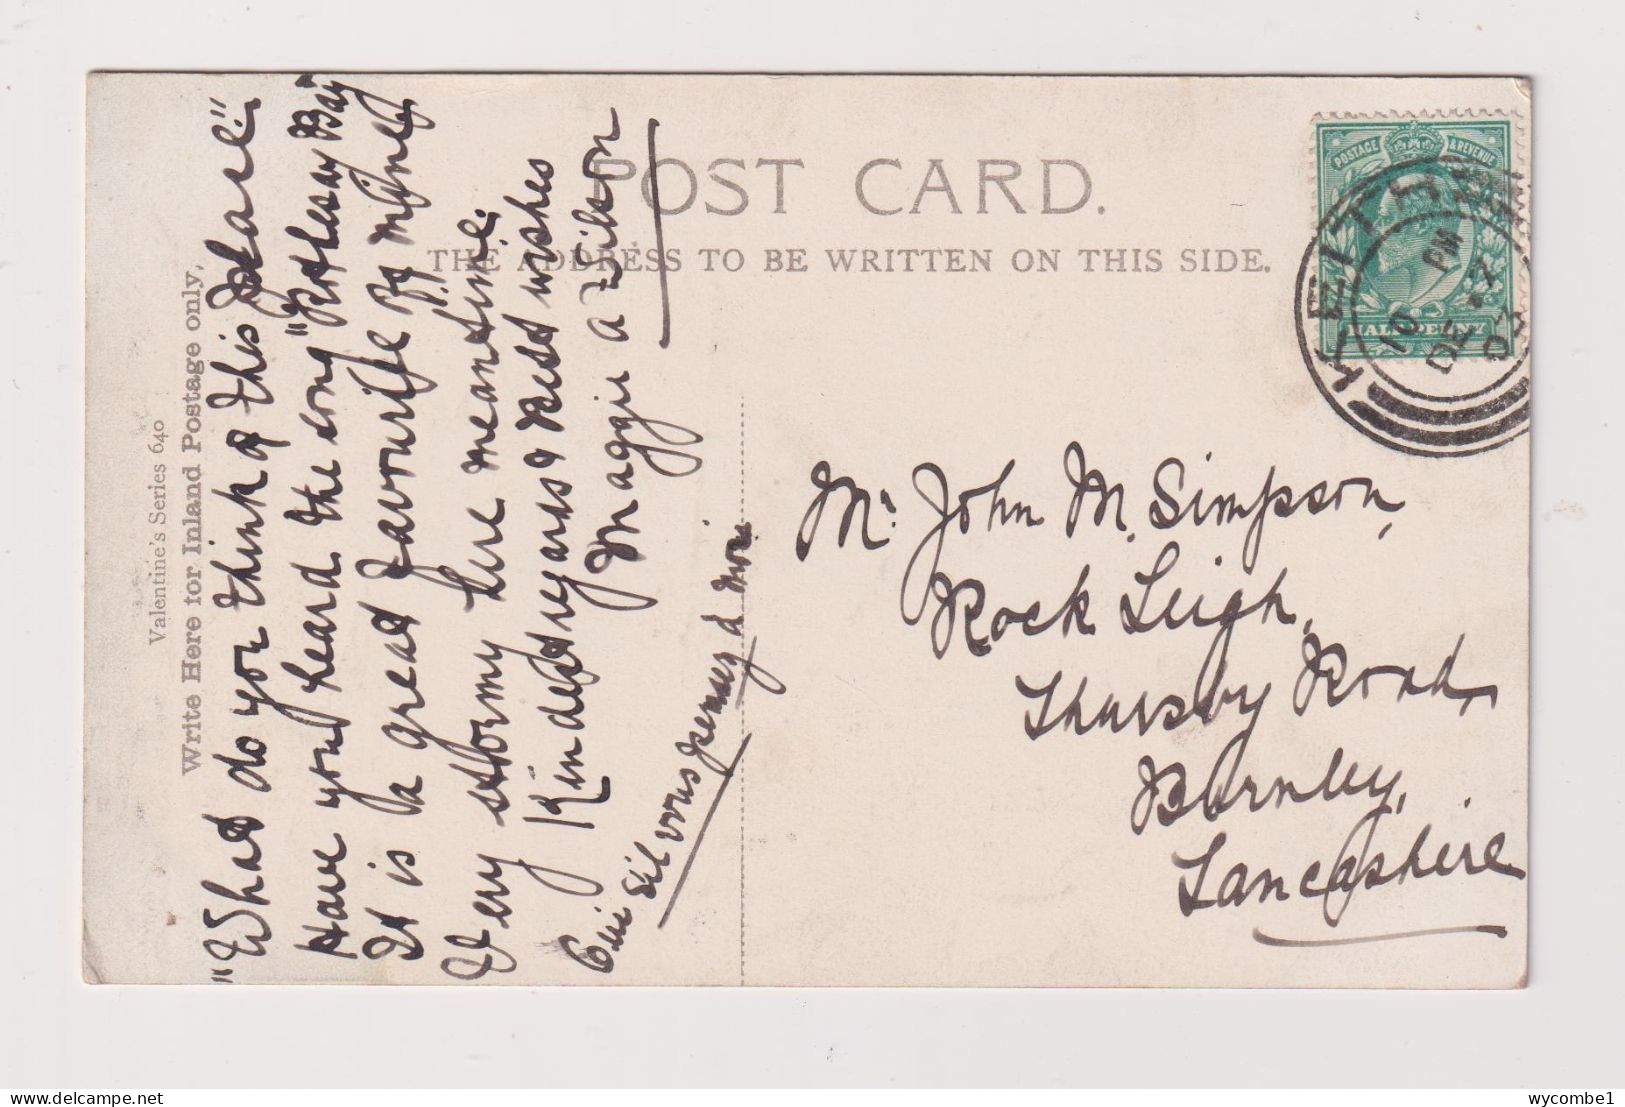 SCOTLAND - Rothesay West Bay Used Vintage Postcard - Bute